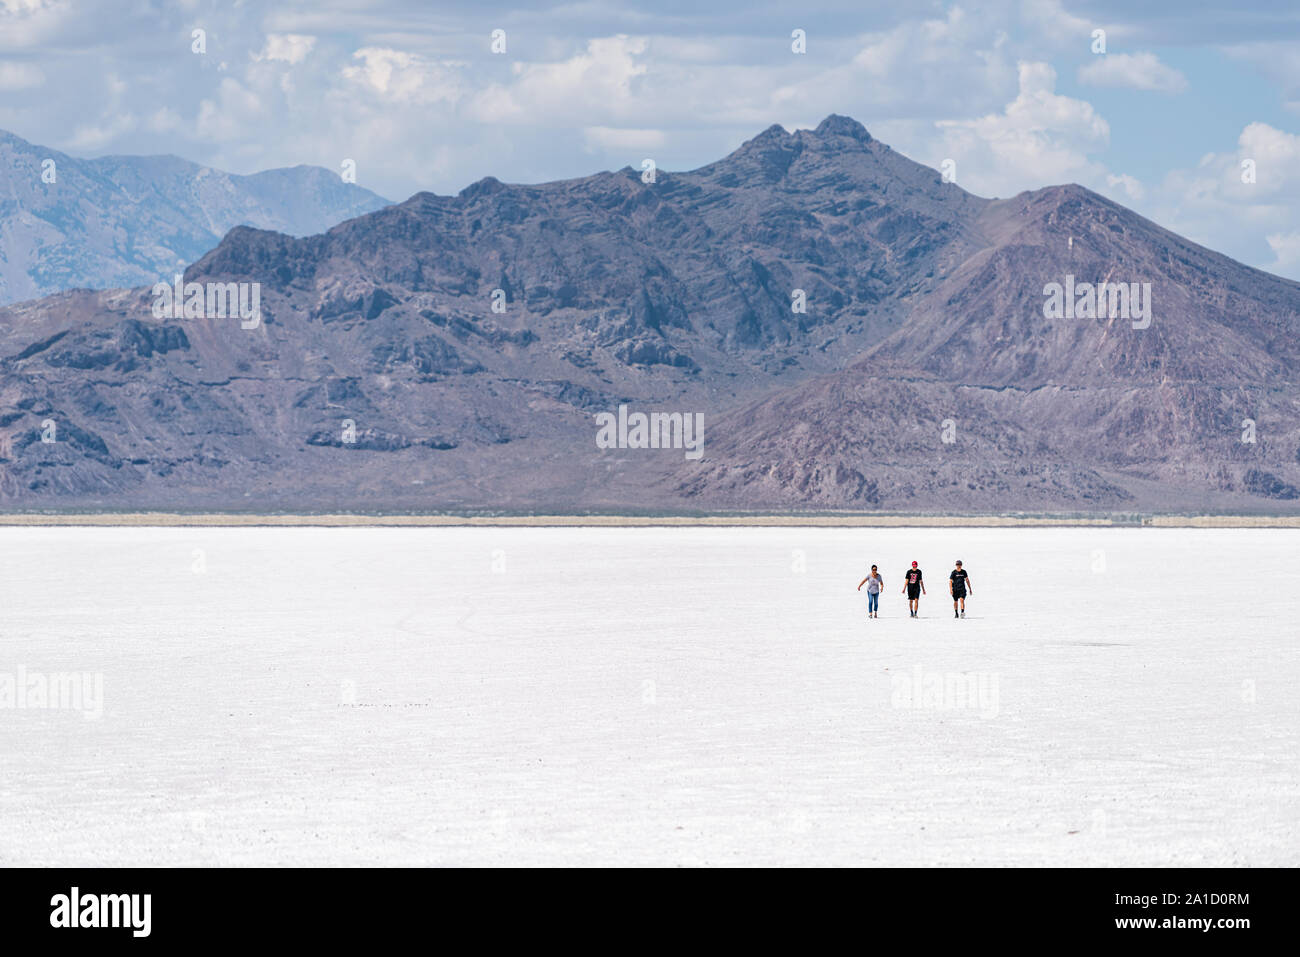 Wendover, USA - July 27, 2019: View of White Bonneville Salt Flats near Salt Lake City, Utah during day with people walking Stock Photo